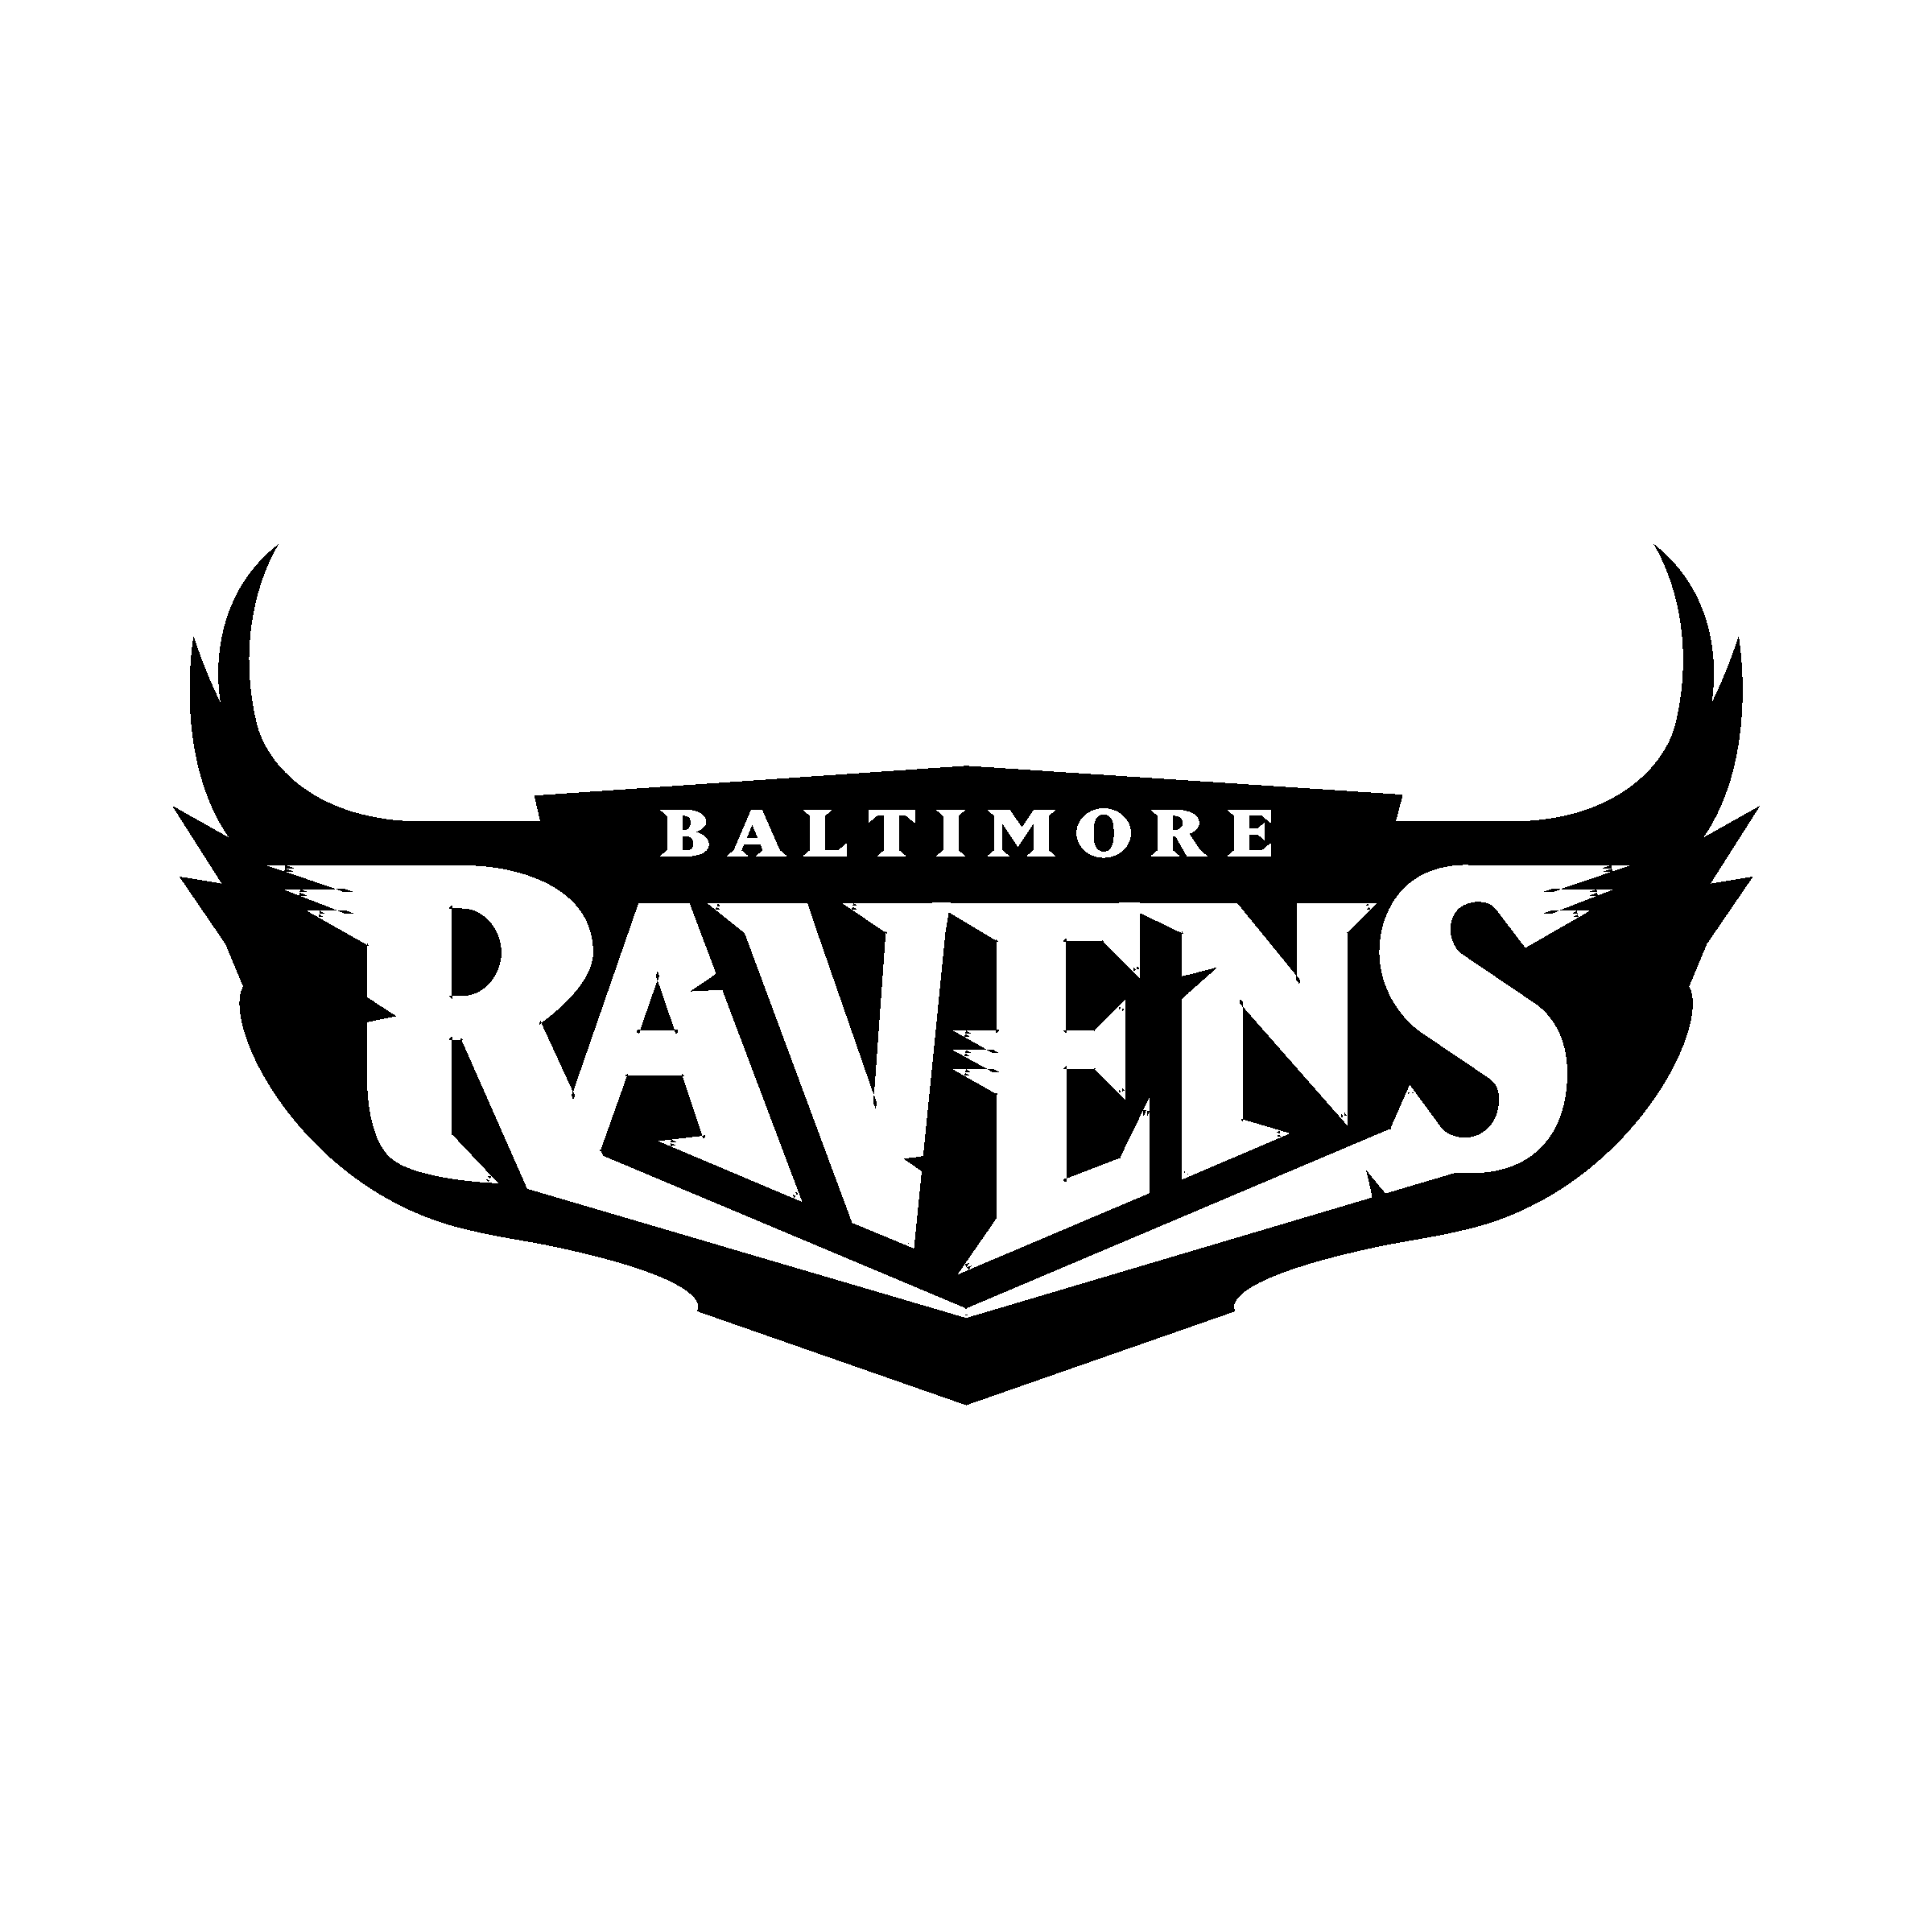 Black and White Ravens Logo - Baltimore Ravens 02 Logo SVG Vector & PNG Transparent Logo